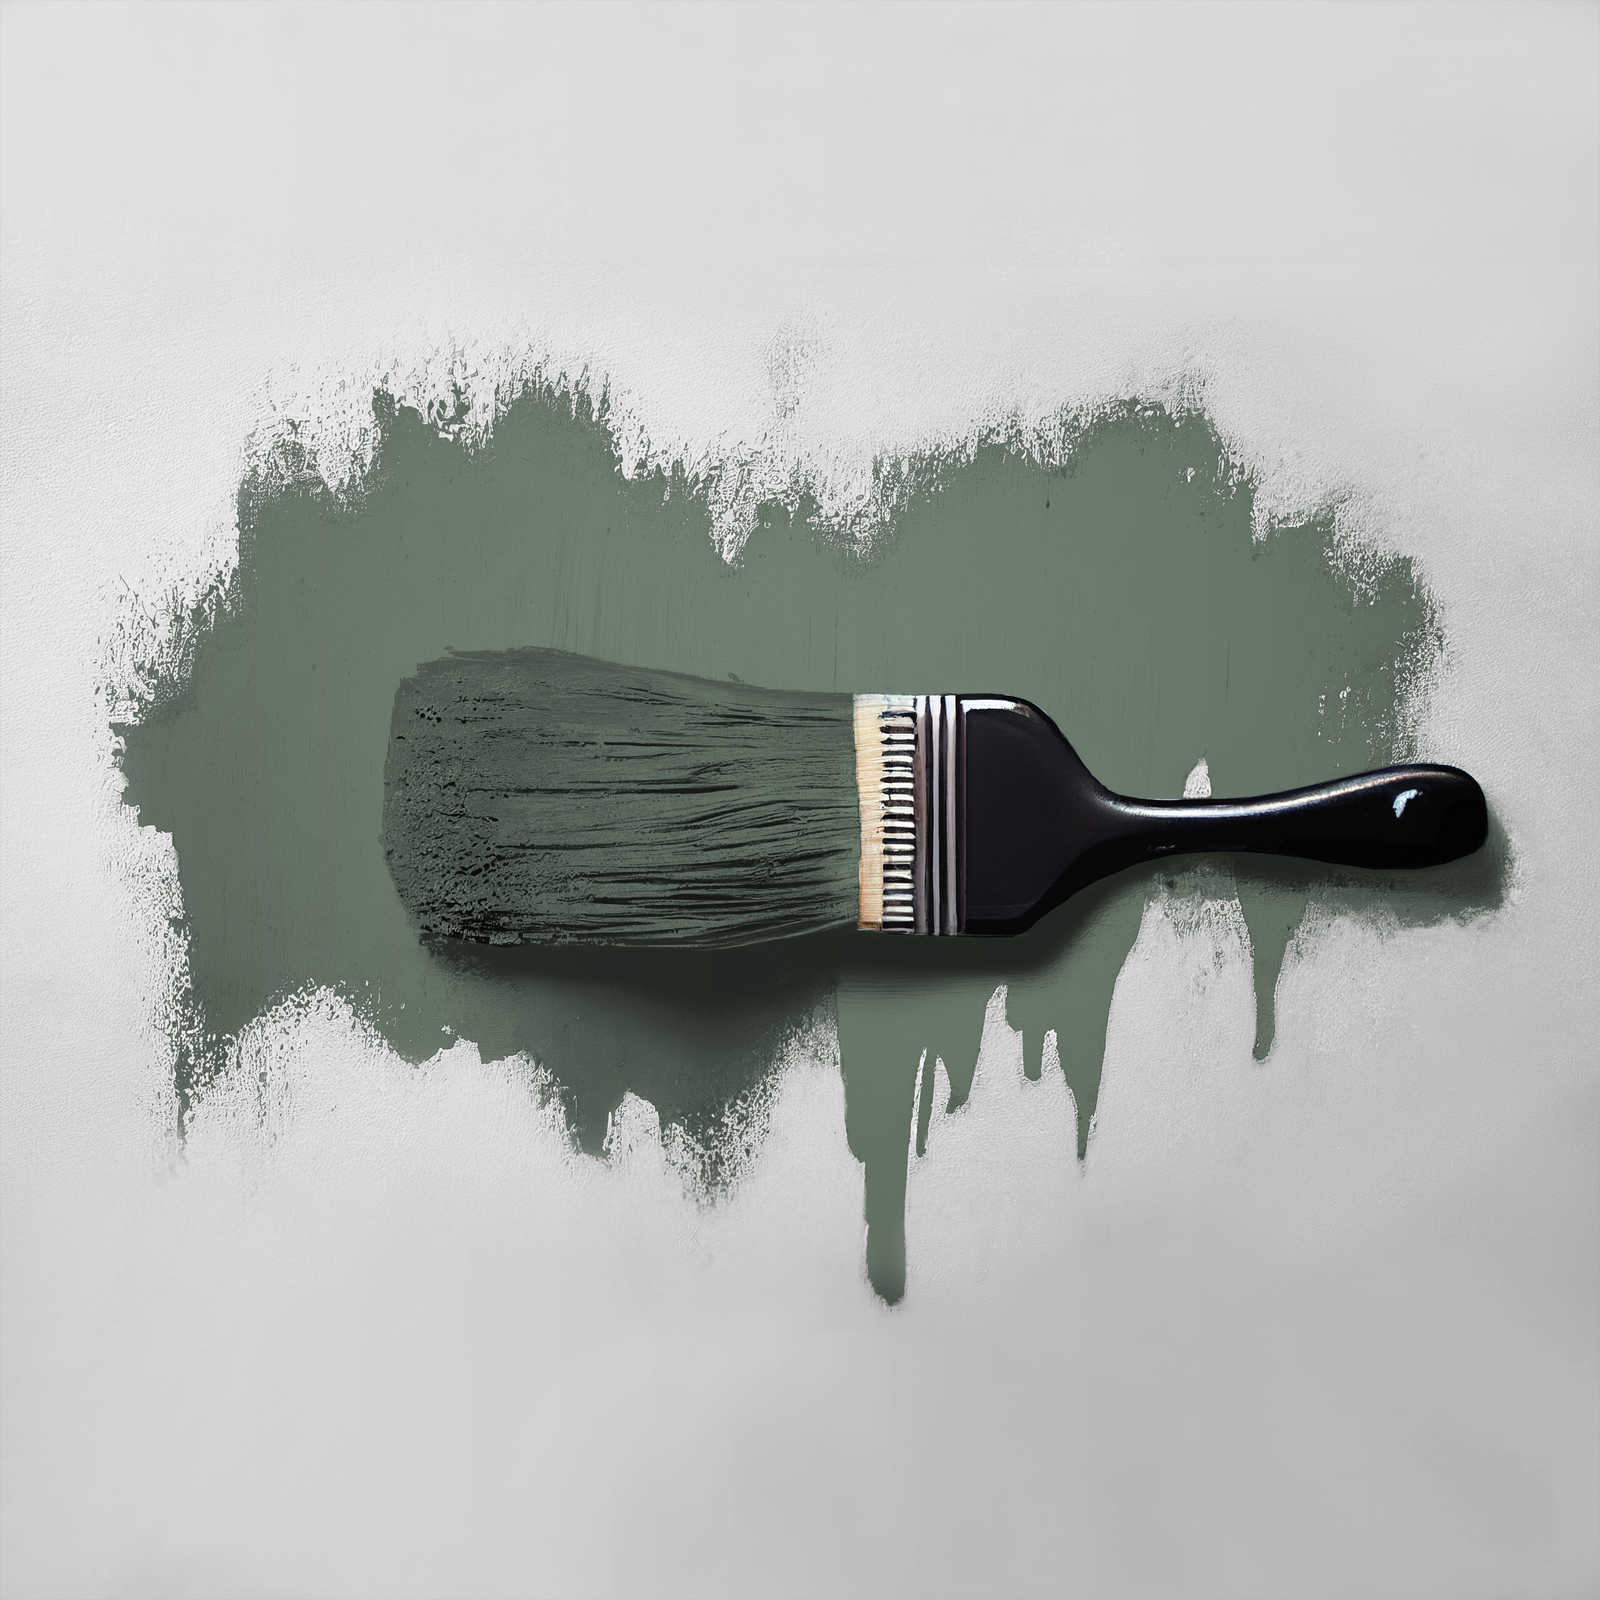             Pintura mural TCK4005 »Ritzy Rosemary« en verde hogareño – 5,0 litro
        